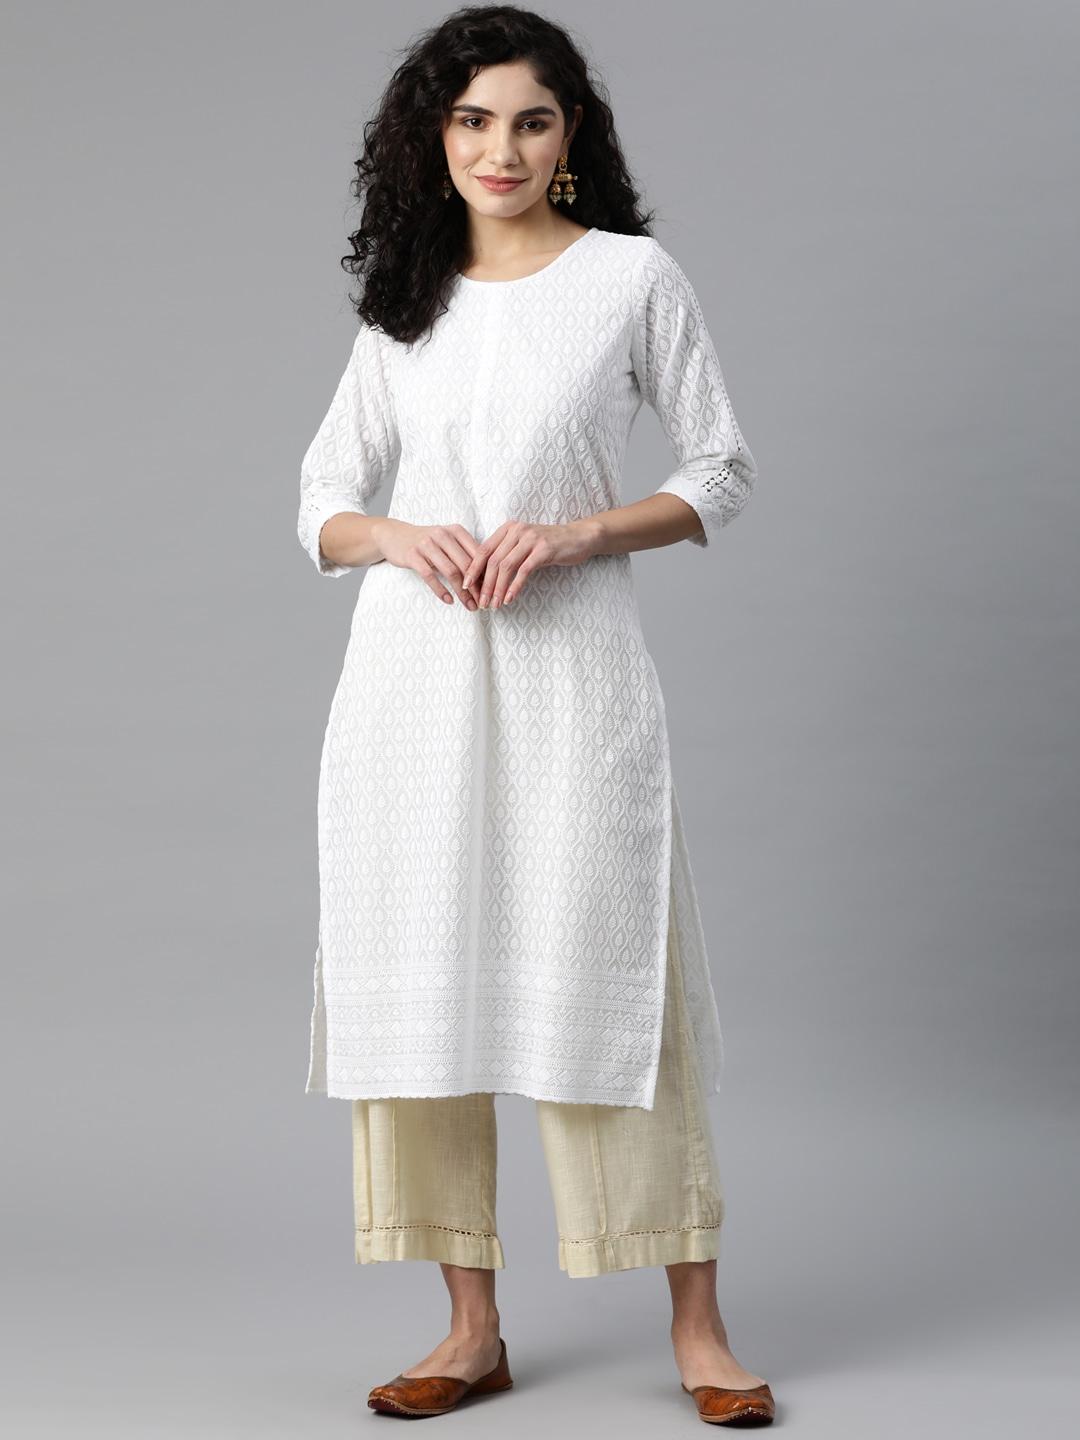 readiprint fashions women white ethnic motifs embroidered cotton chikankari kurta